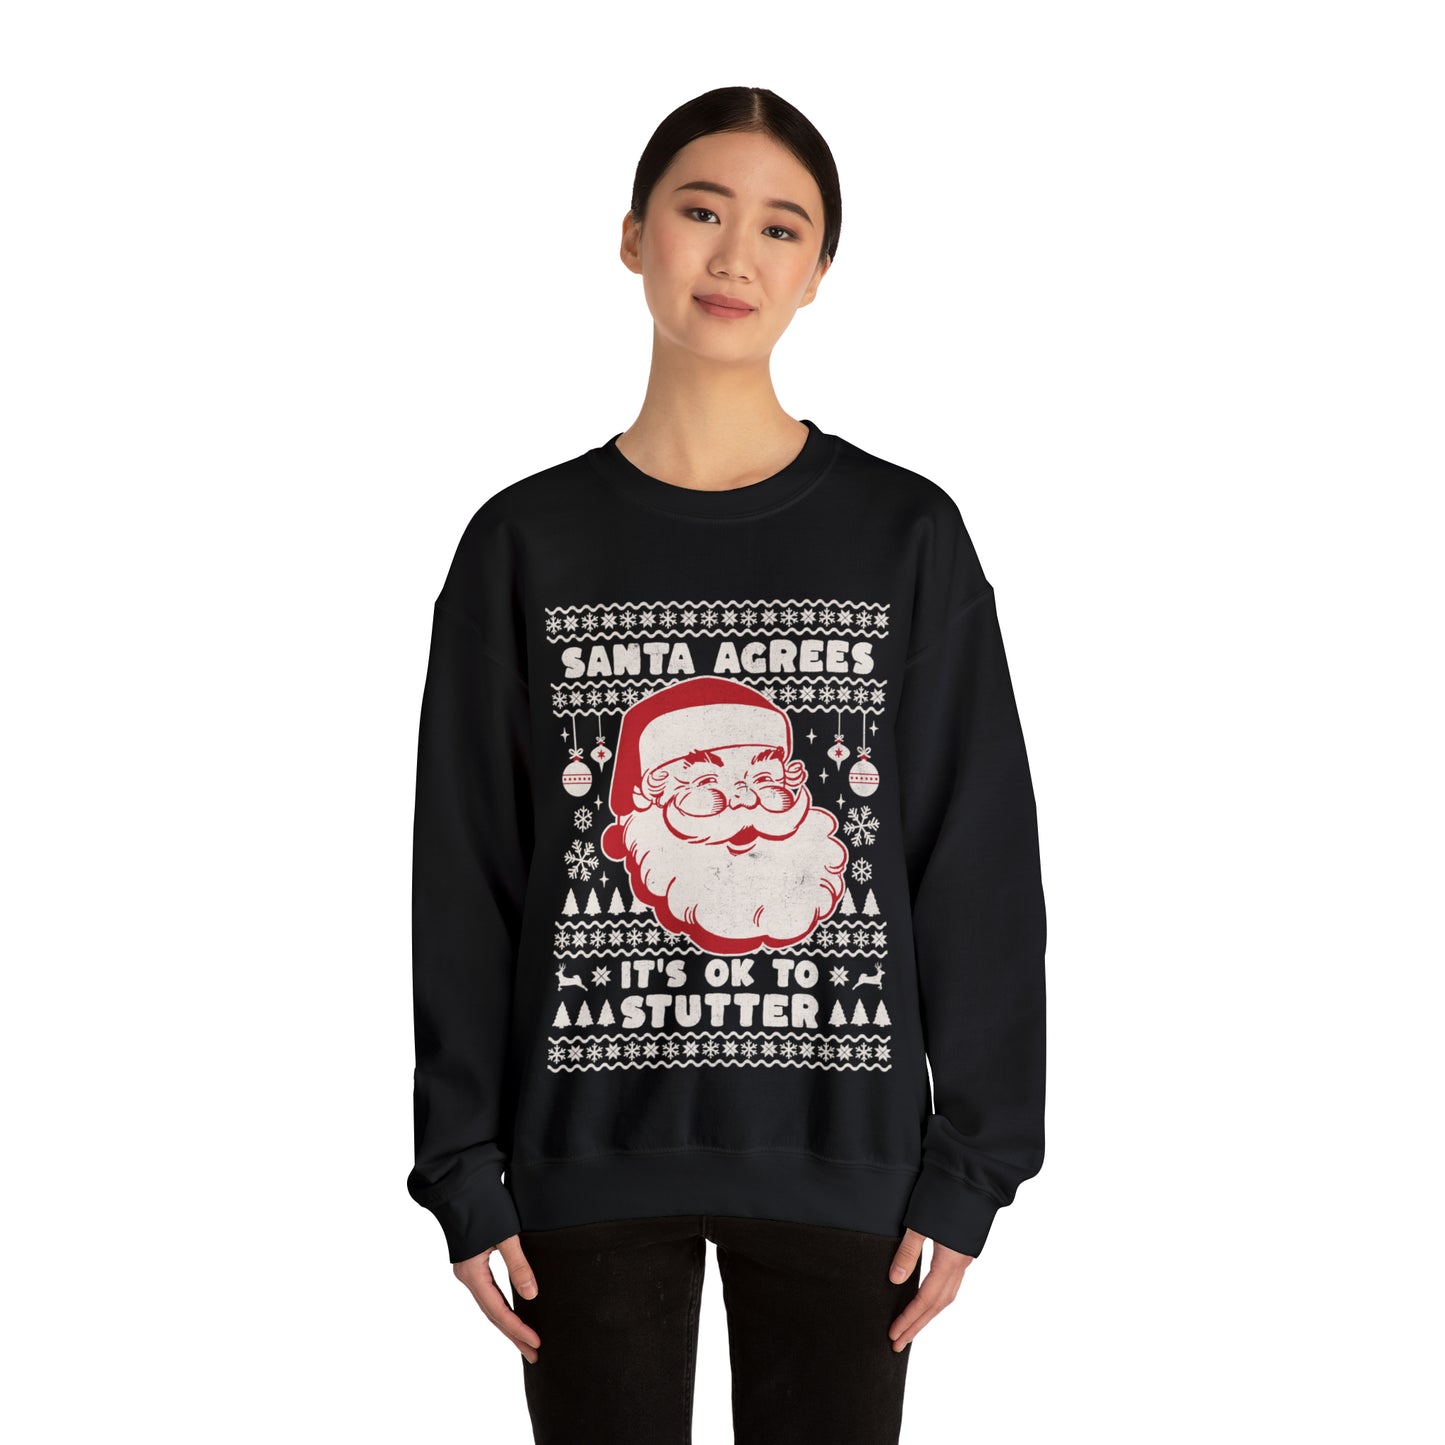 Santa Agrees It's OK to Stutter Ugly Christmas Sweatshirt